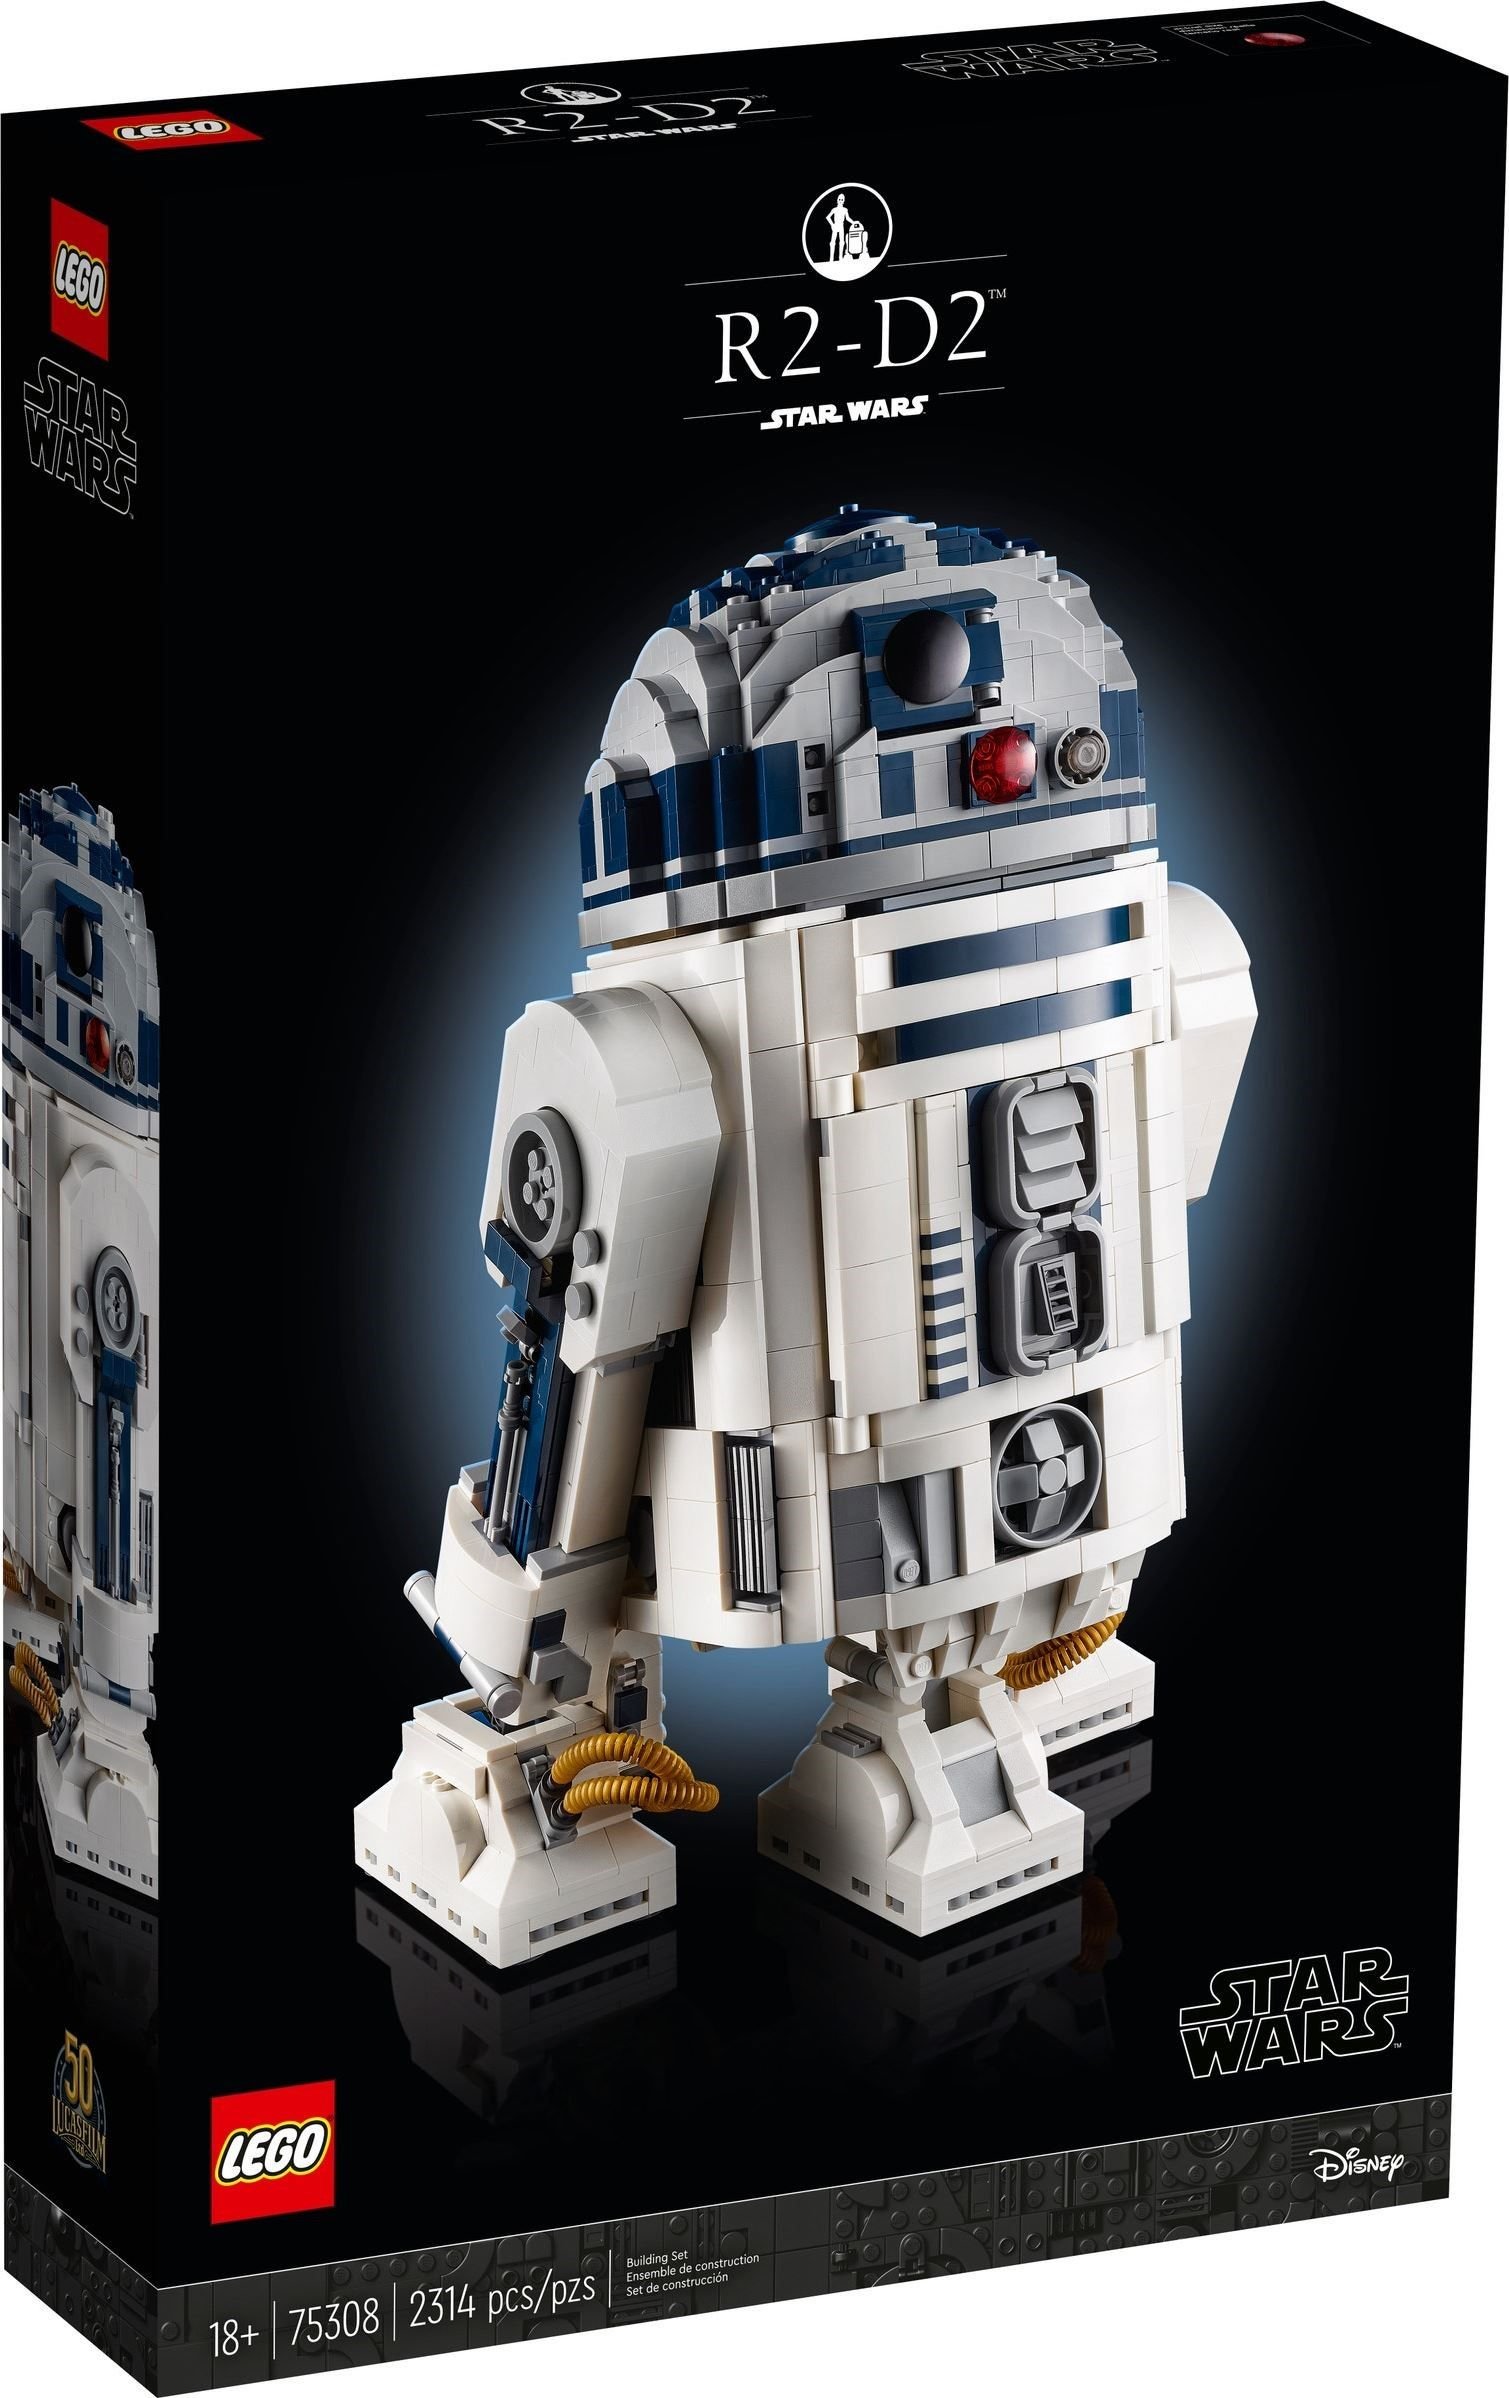 LEGO Star Wars - R2-D2 75308, 2314 piese